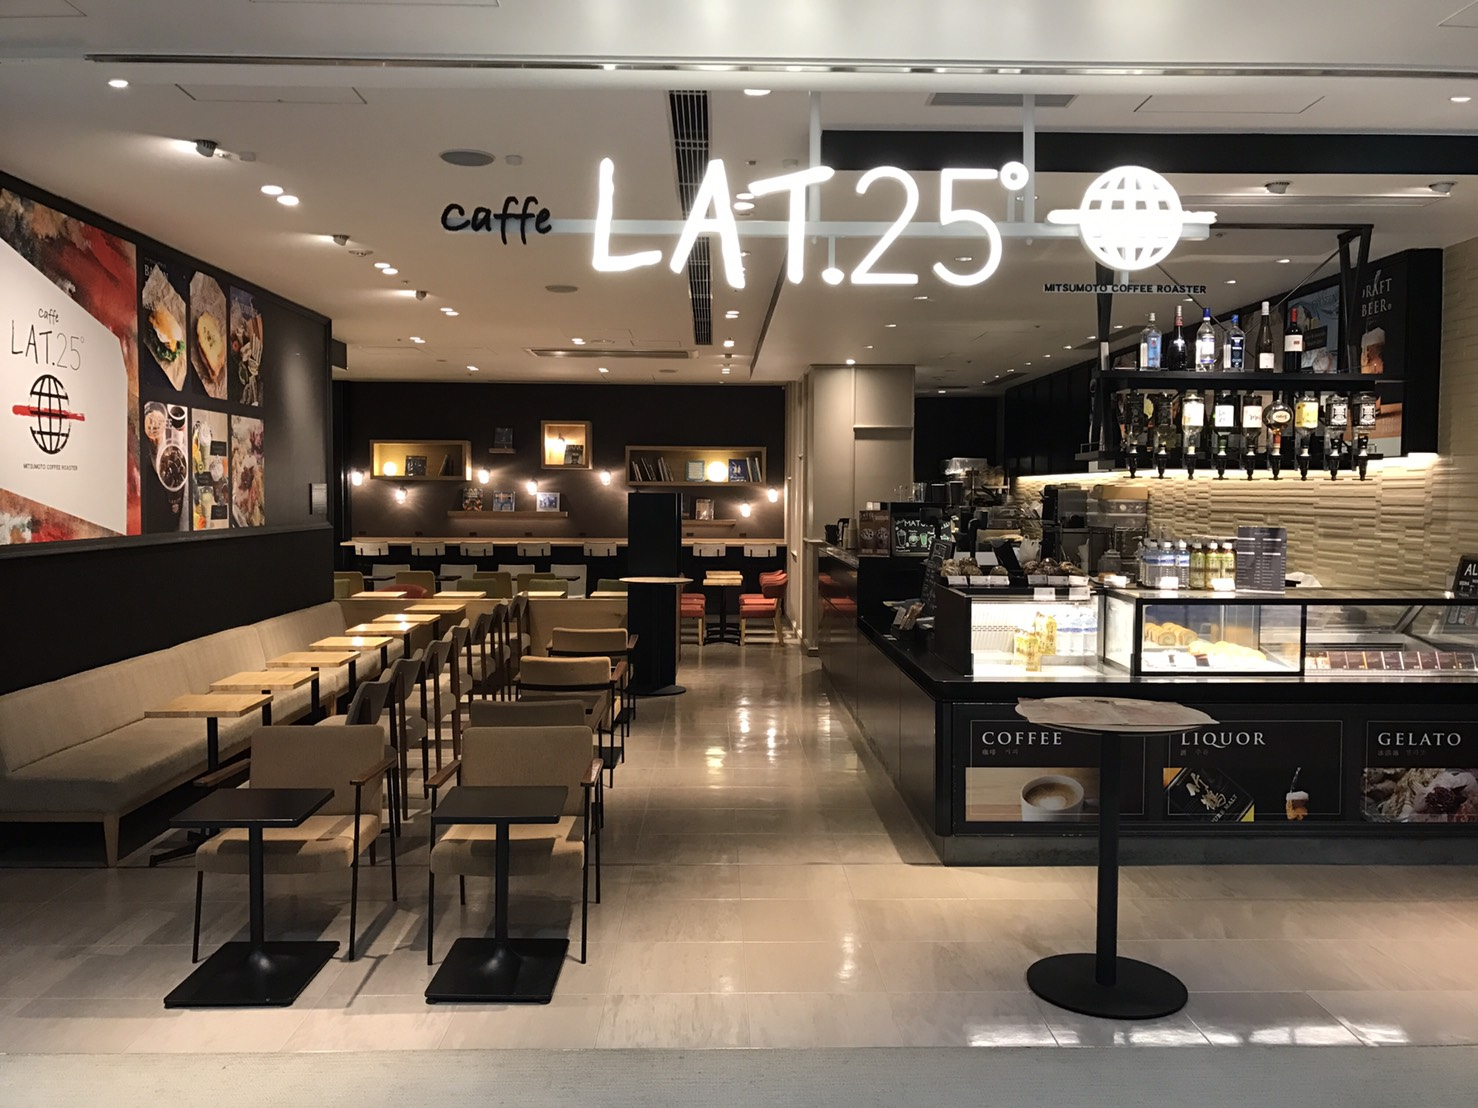 caffe LAT.25° 나리타공항 제3터미널 3F점 매장 이미지